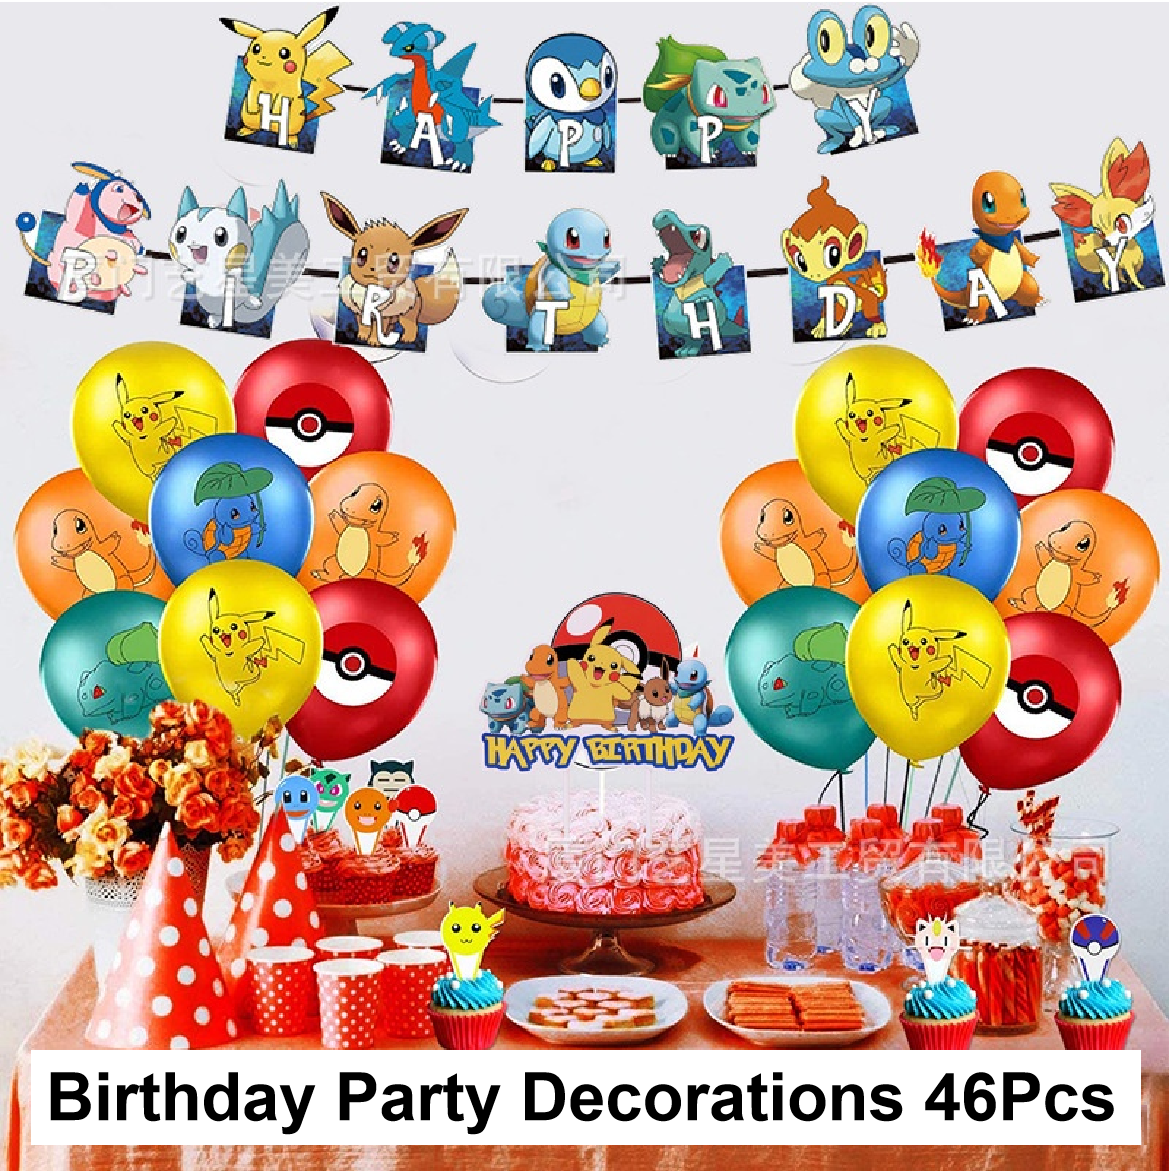 The ULTIMATE Pokemon Birthday Party